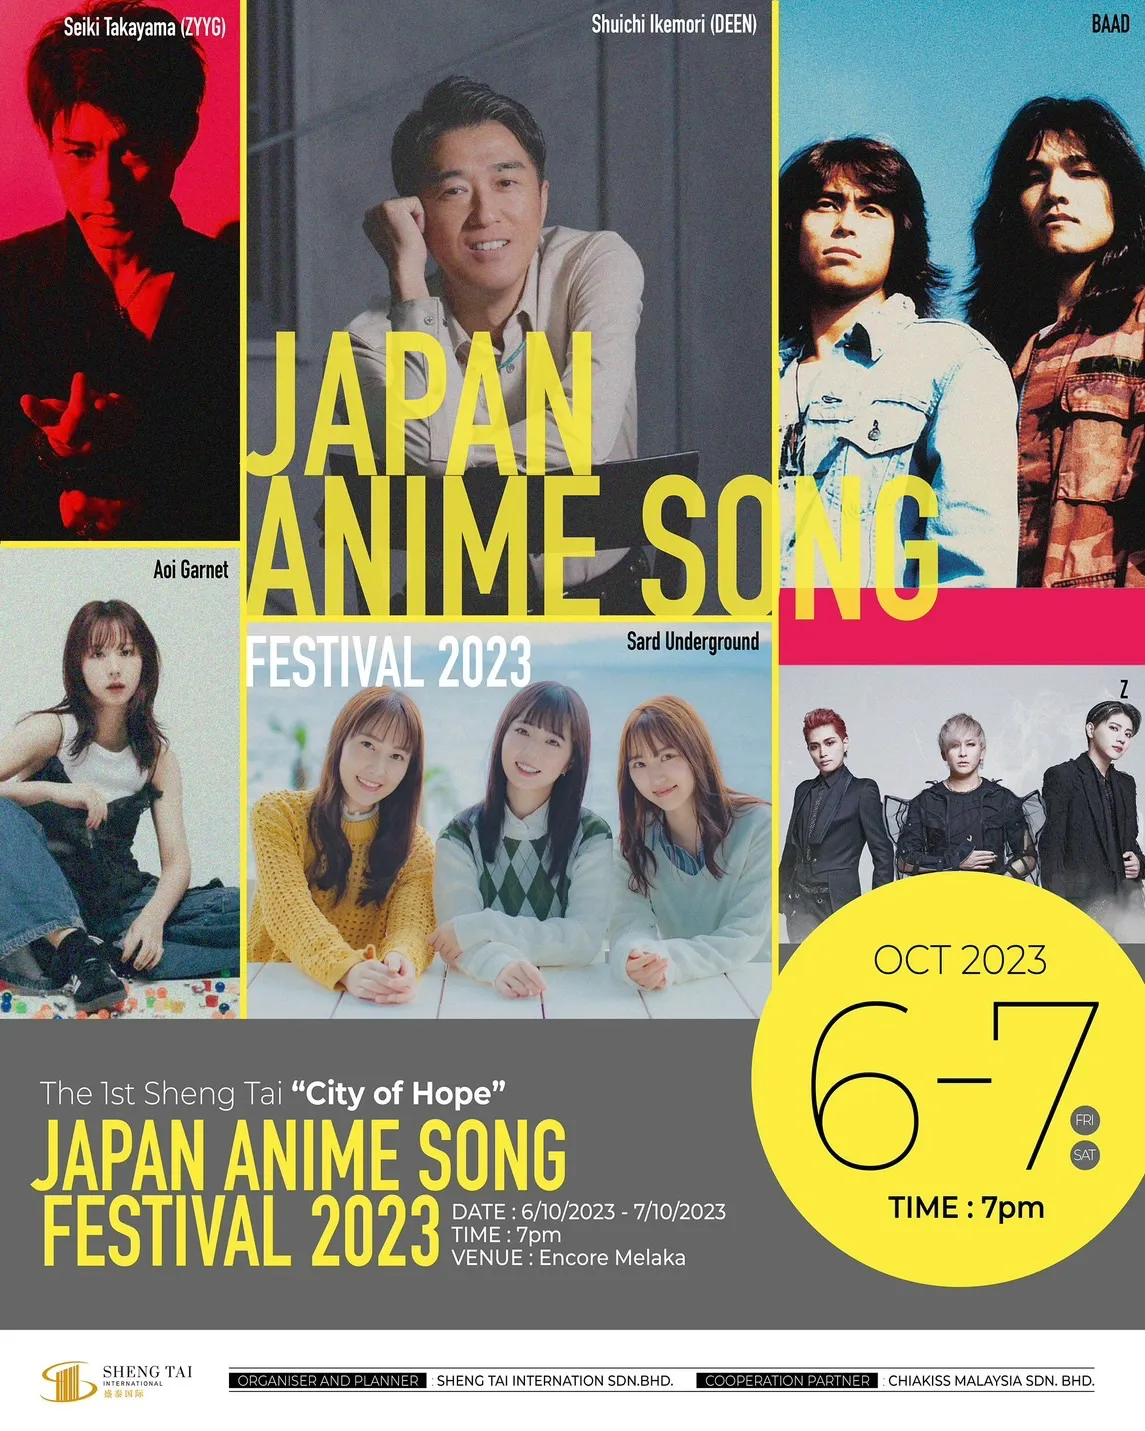 The 1st Sheng Tai “City of Hope” Japan Anime Song Festival 2023